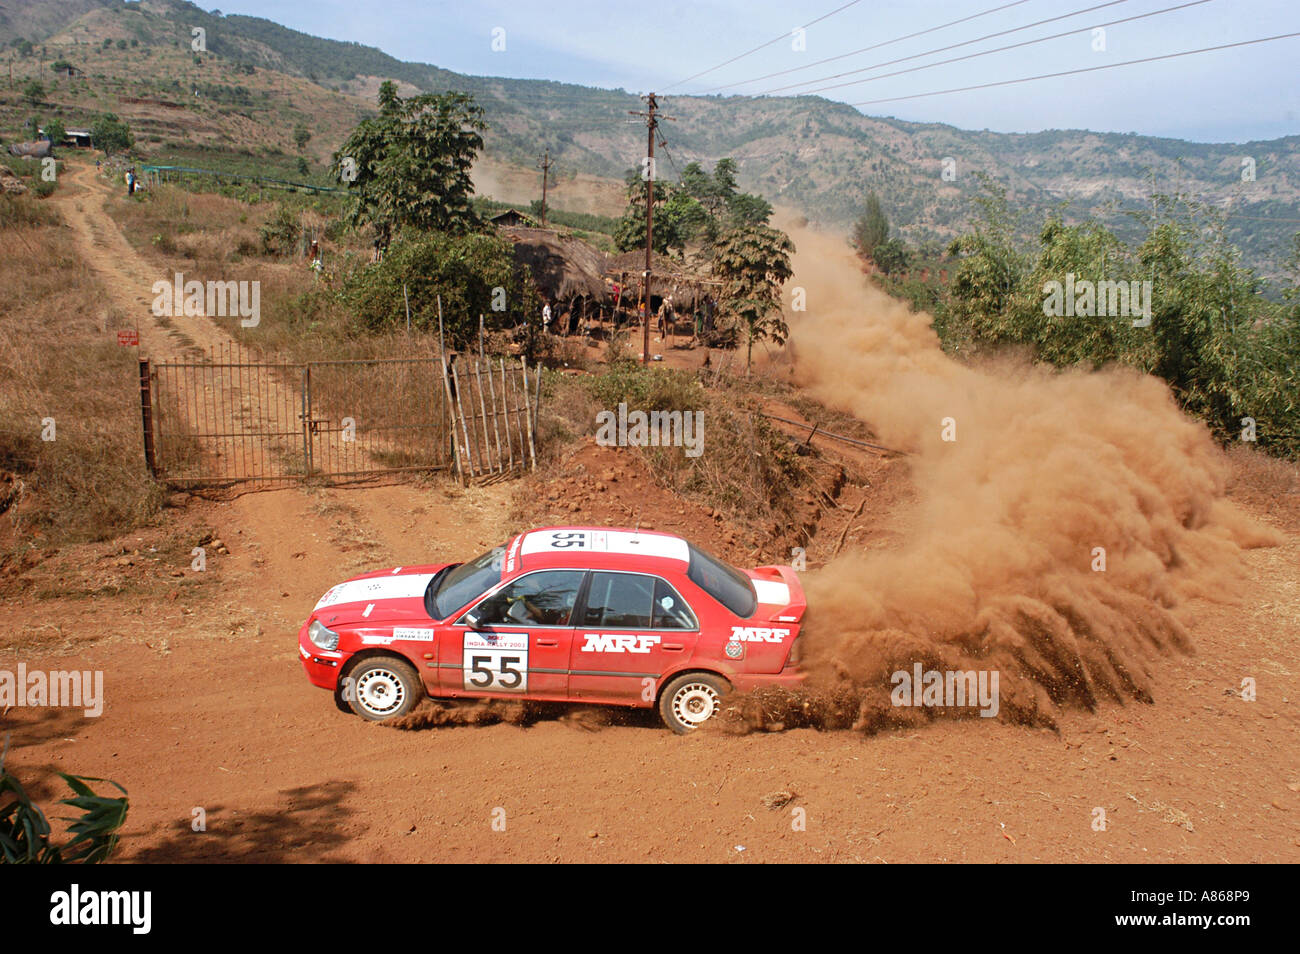 Racing car passing through dusty roads Stock Photo